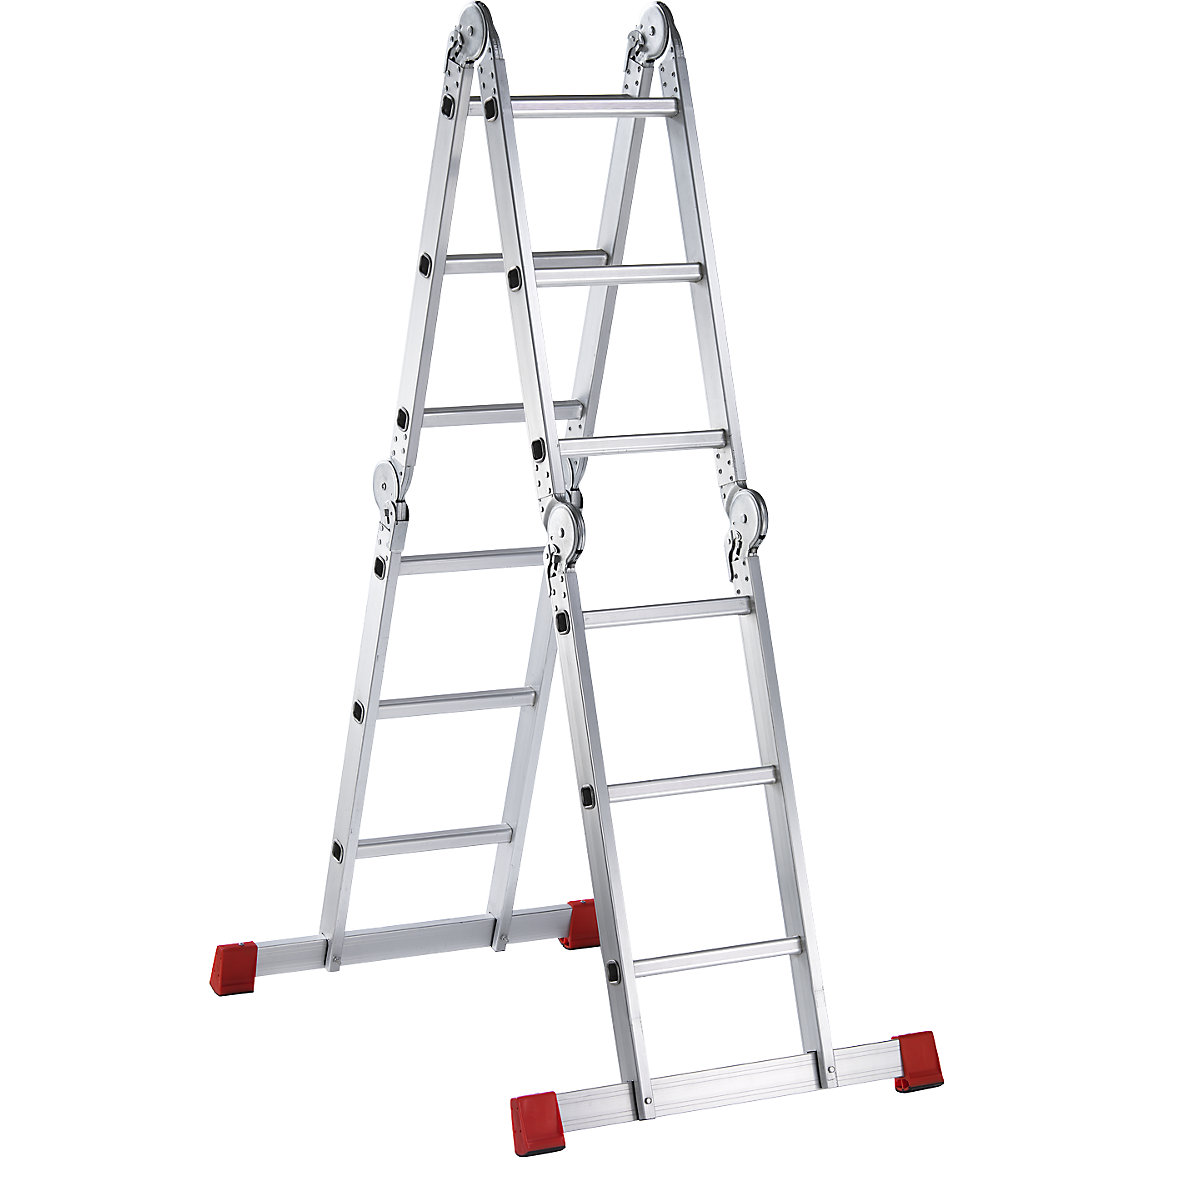 EASY hinged ladder